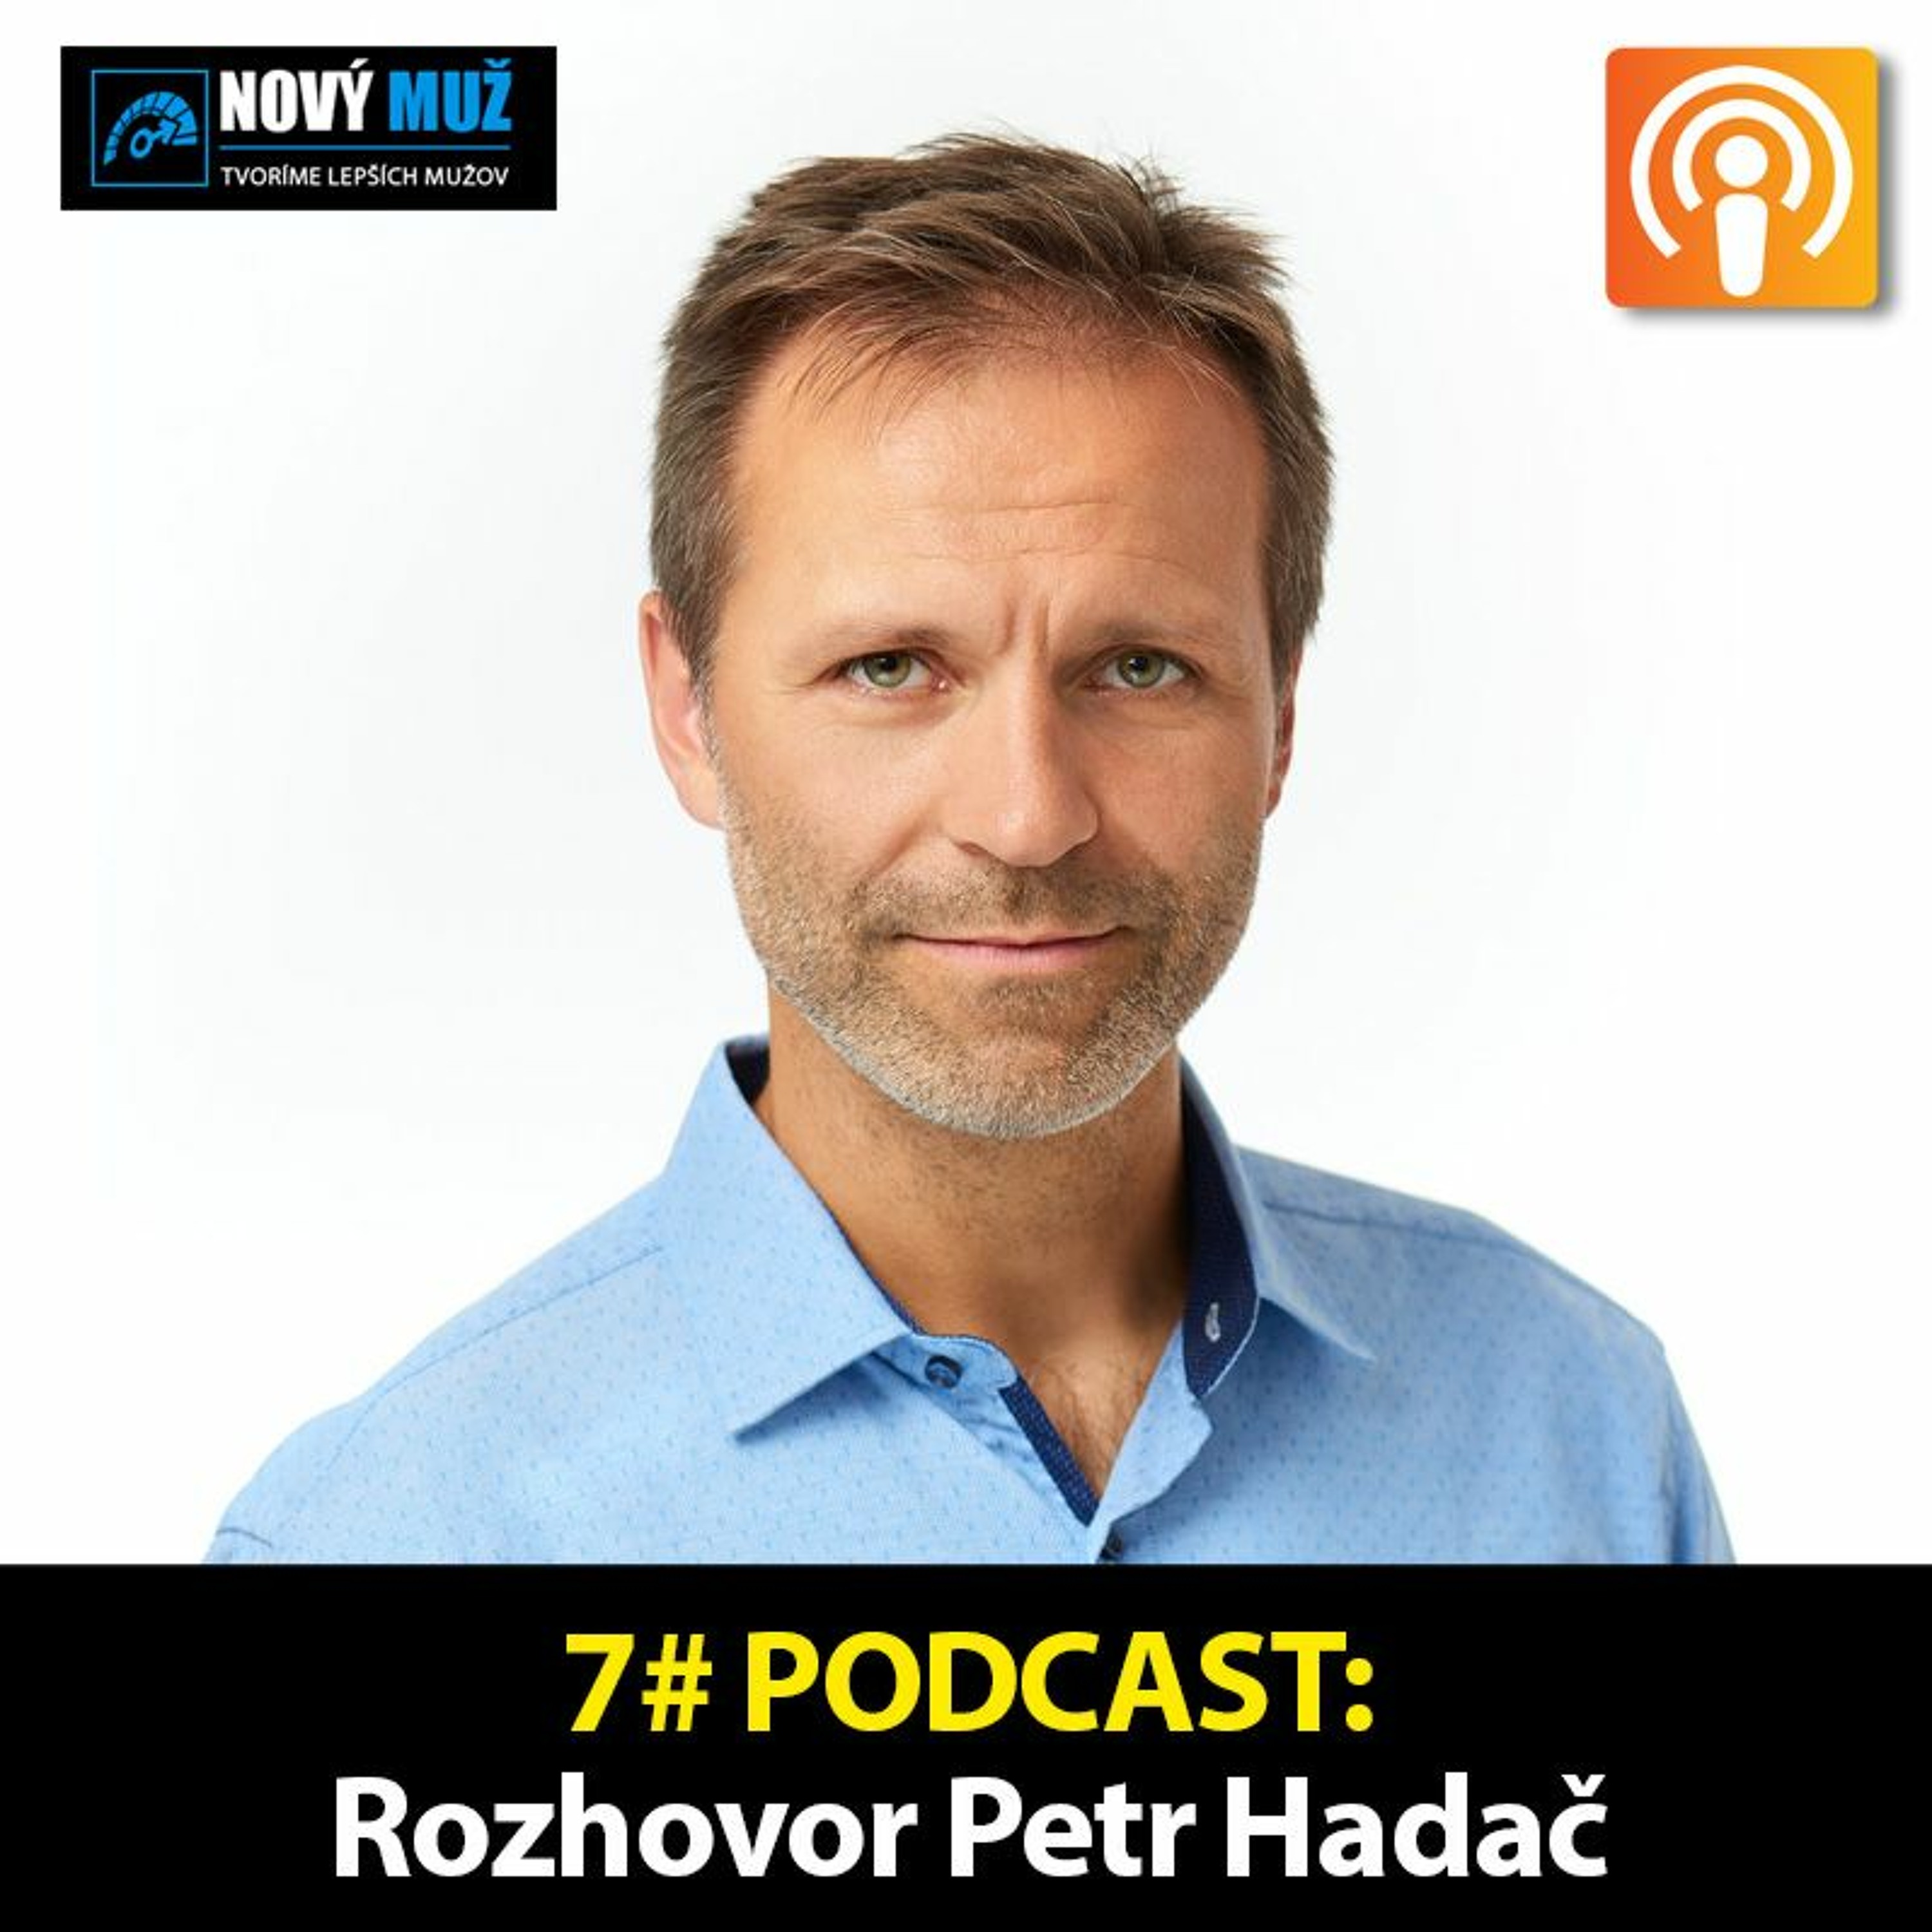 7# PODCAST: Rozhovor Petr Hadač - O mužskej sile